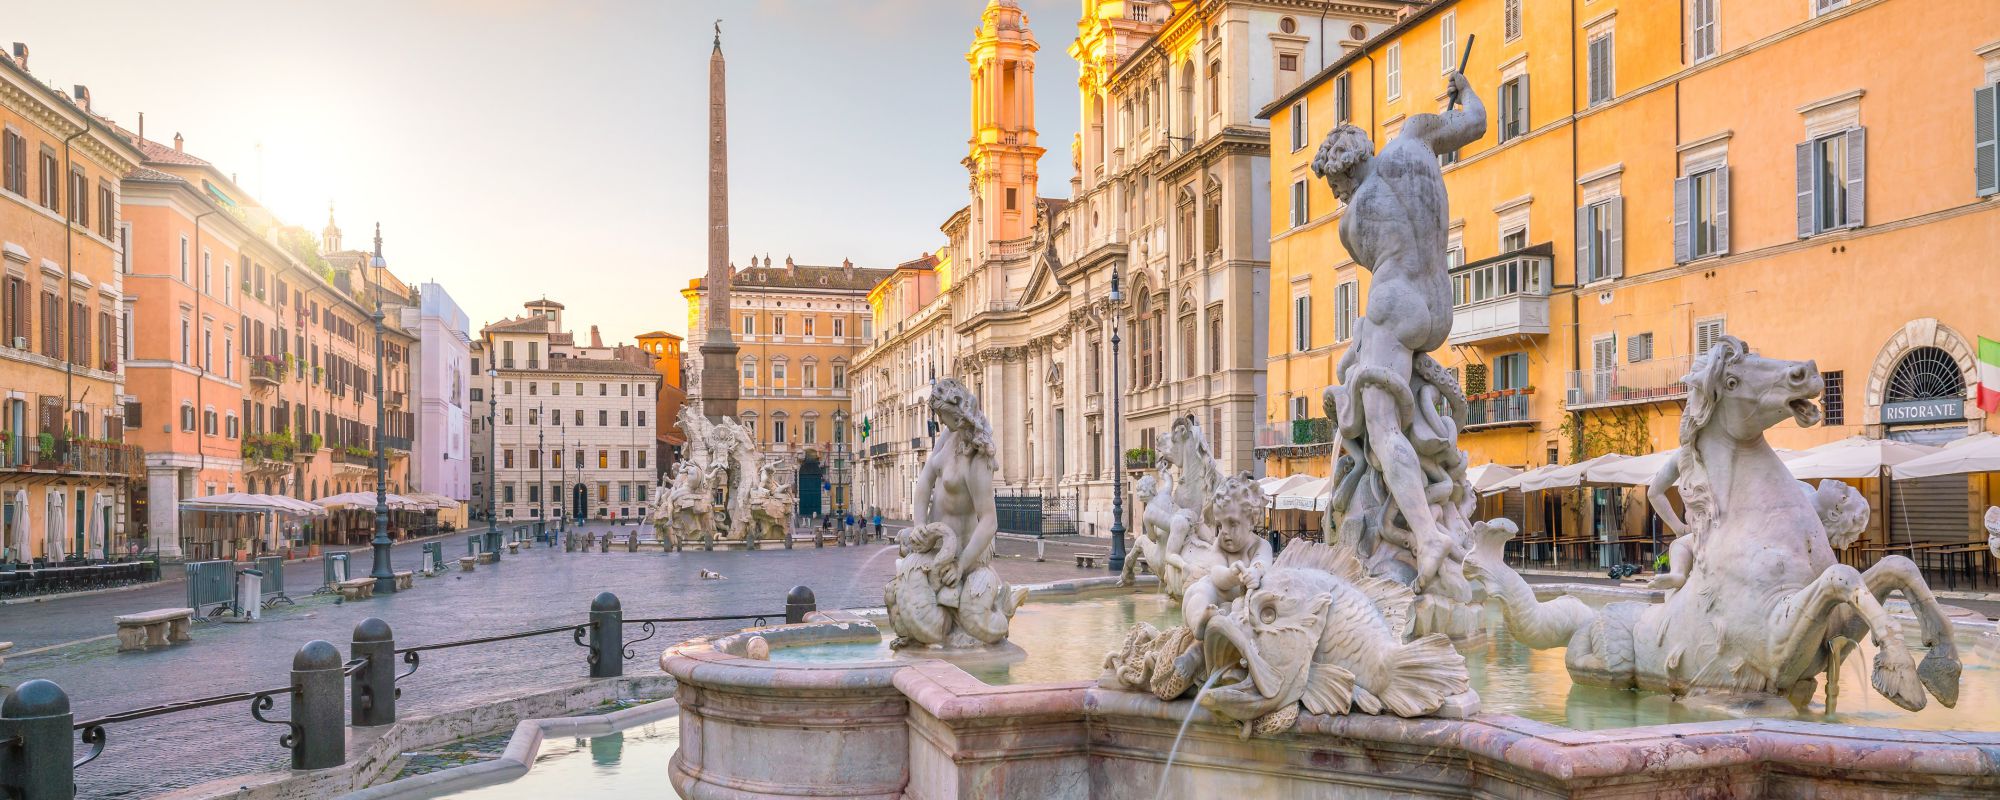 Italy - credits: f11photo/Shutterstock